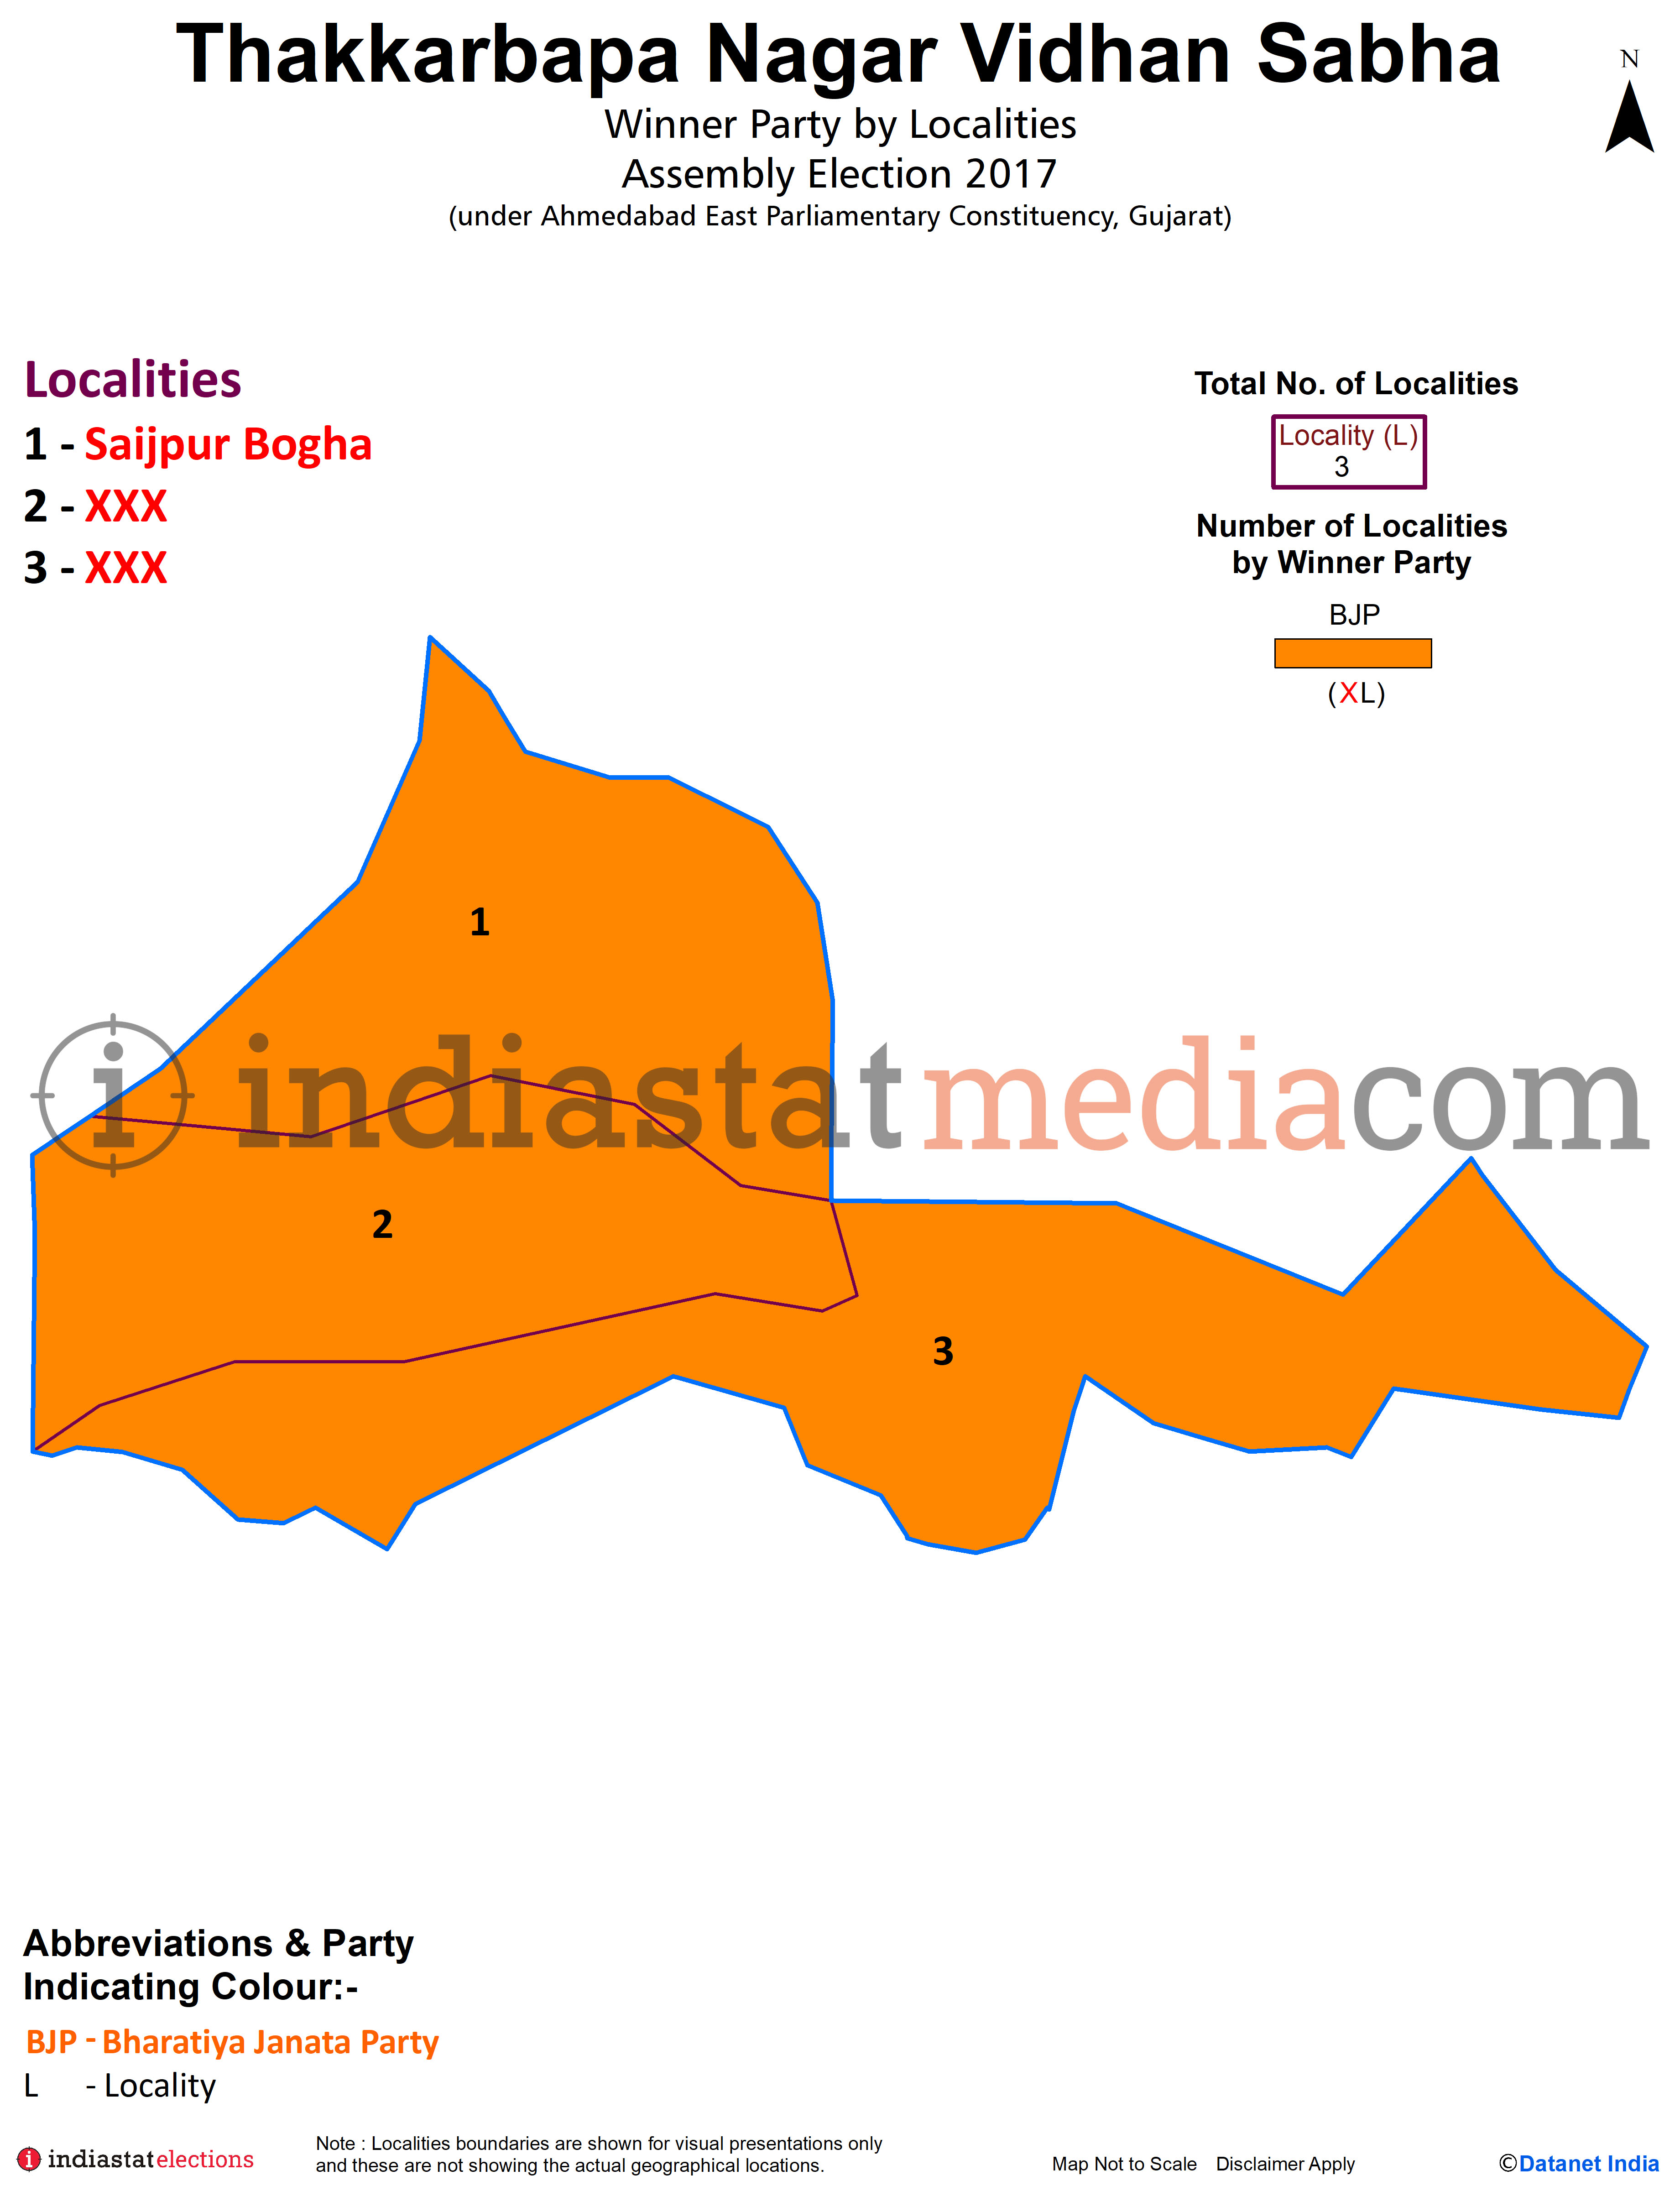 Winner Parties by Localities in Thakkarbapa Nagar Assembly Constituency under Ahmedabad East Parliamentary Constituency in Gujarat (Assembly Election - 2017)